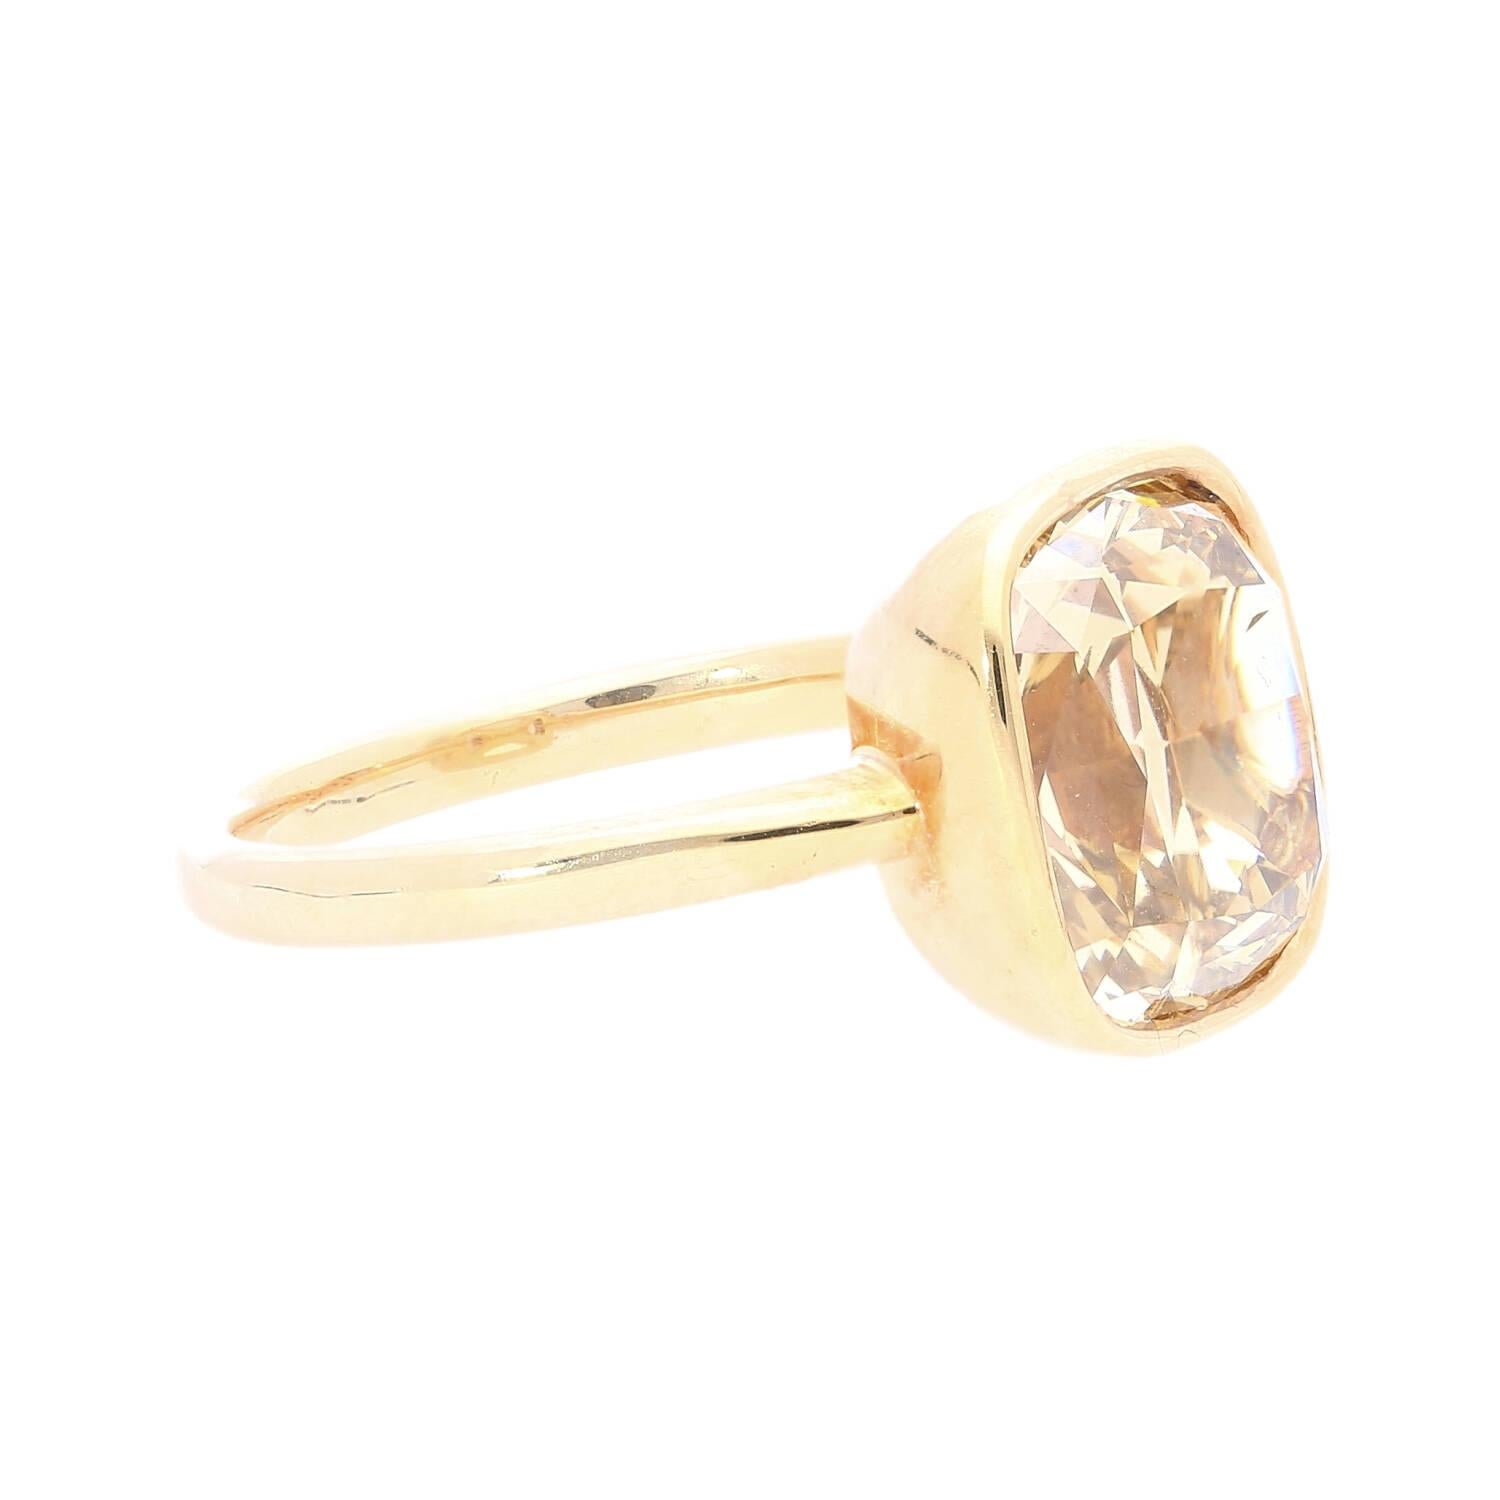 Modern GIA Certified 5.02 Carat Cushion Cut Fancy Brown Yellow Diamond Ring in 18k Rose For Sale